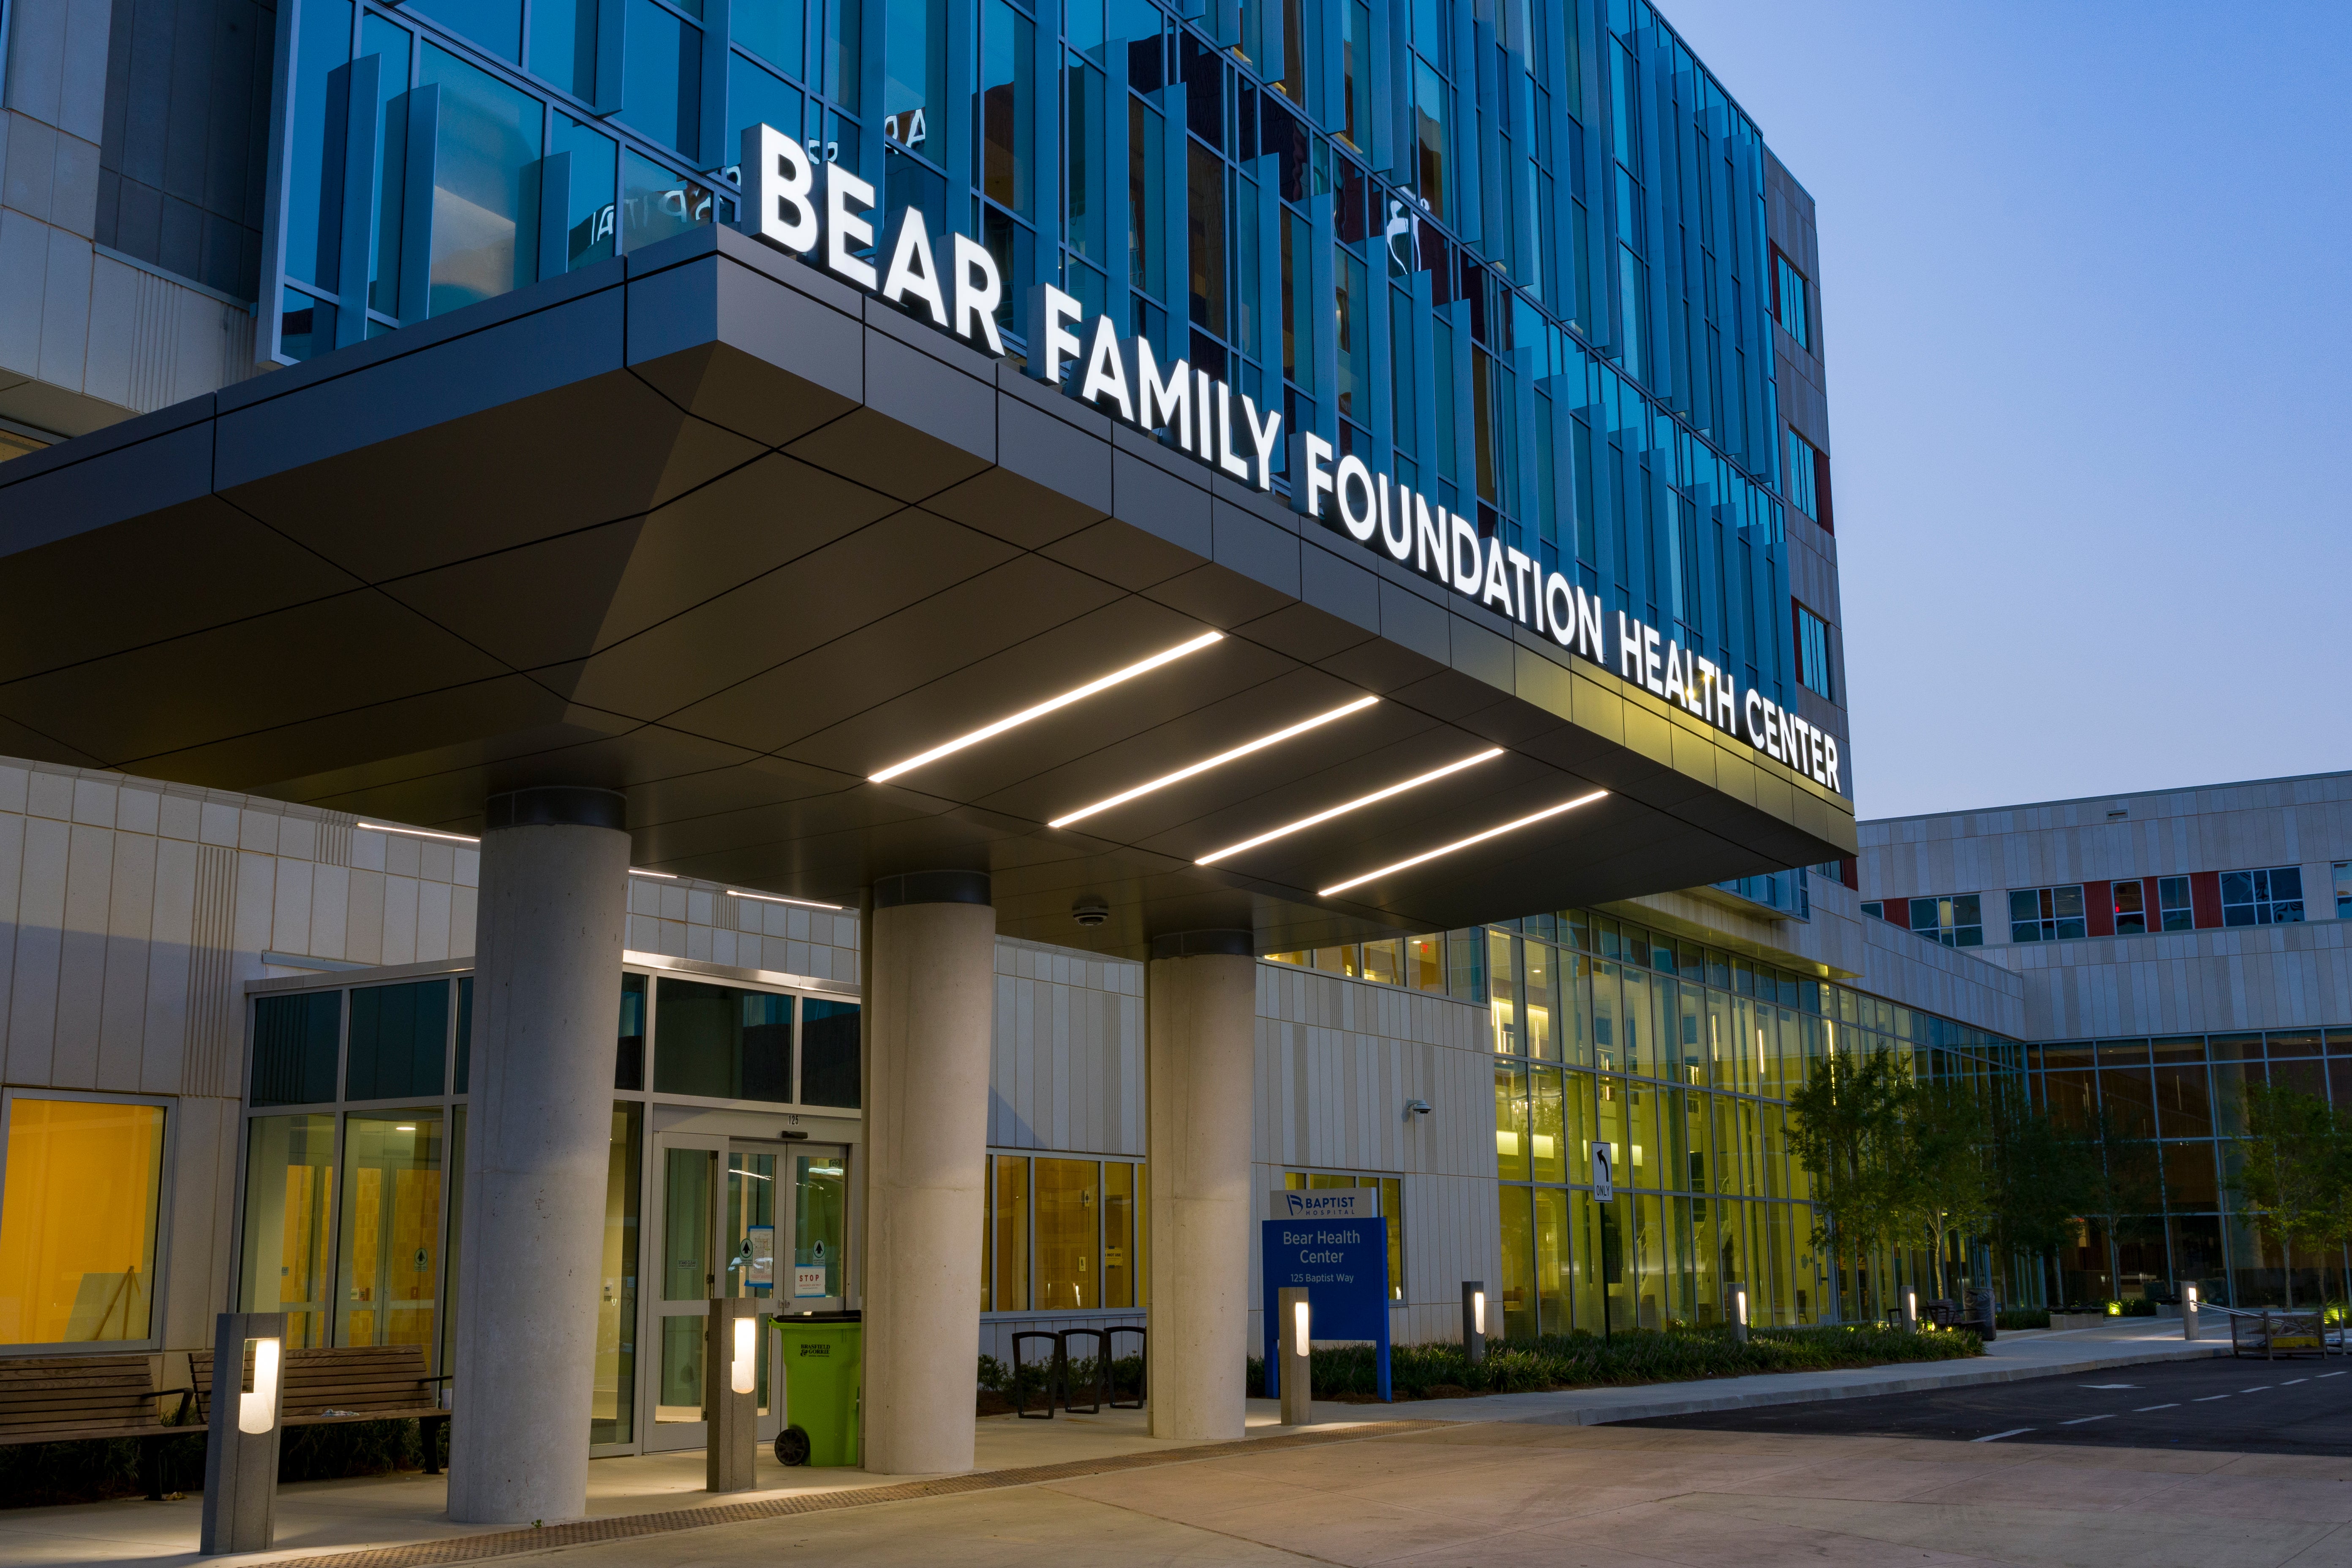 Bear Family Foundation Health Center front entrance